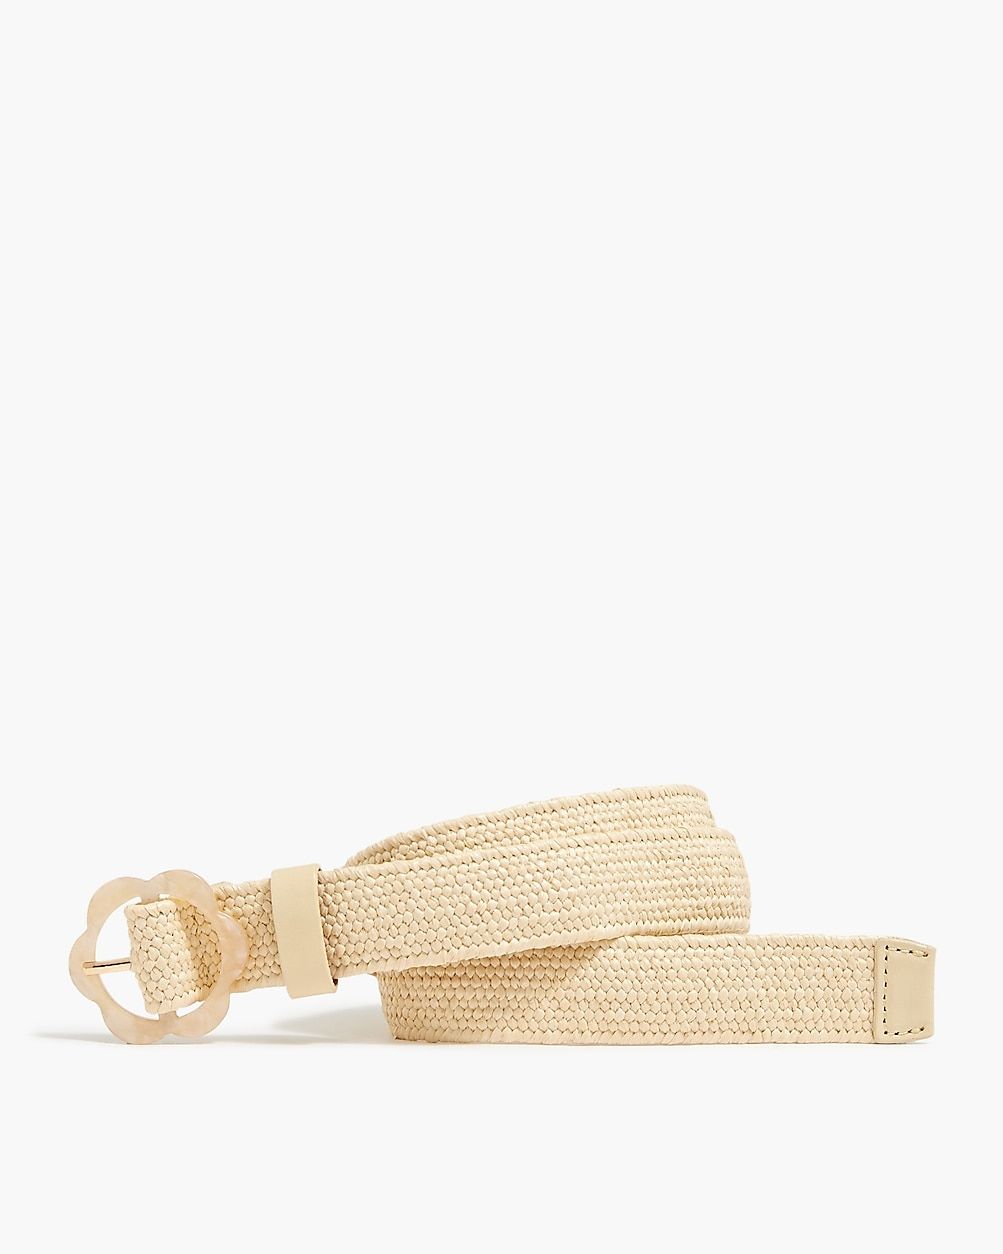 Girls' woven belt with flower buckle | J.Crew Factory